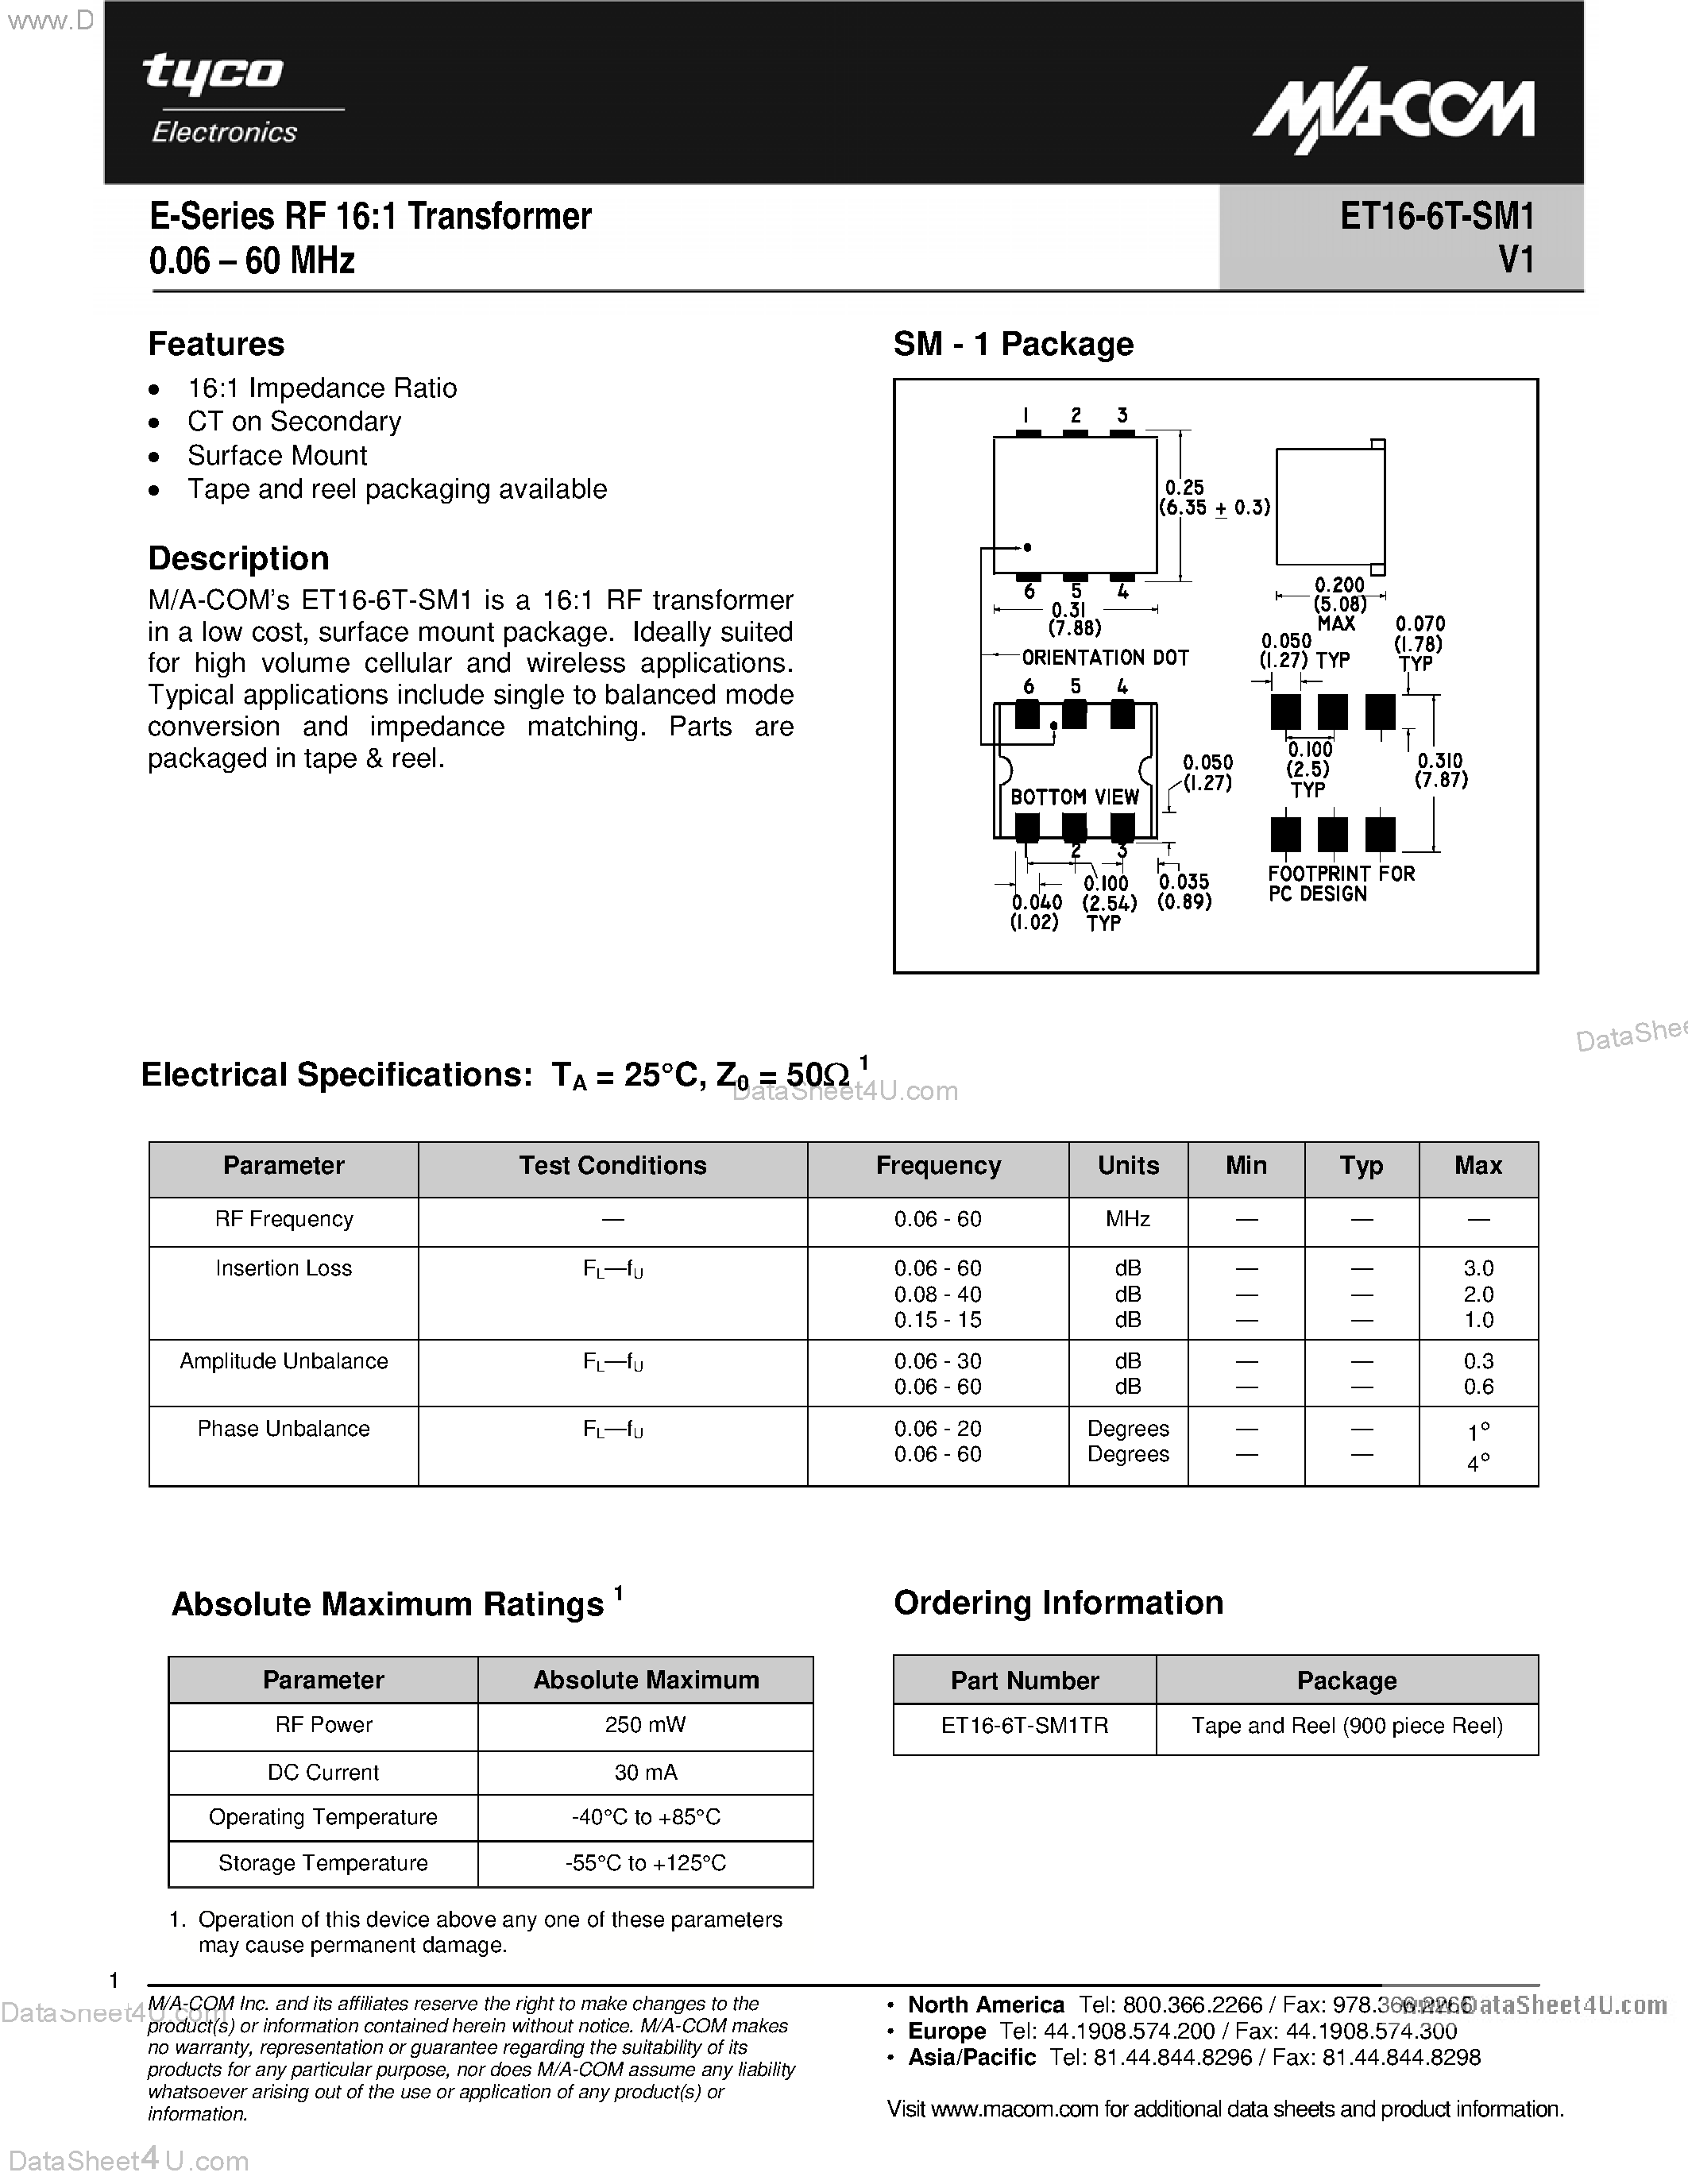 Datasheet ET16-6T-SM1 - E-Series RF 16:1 Transformer 0.06 - 60 MHz page 1